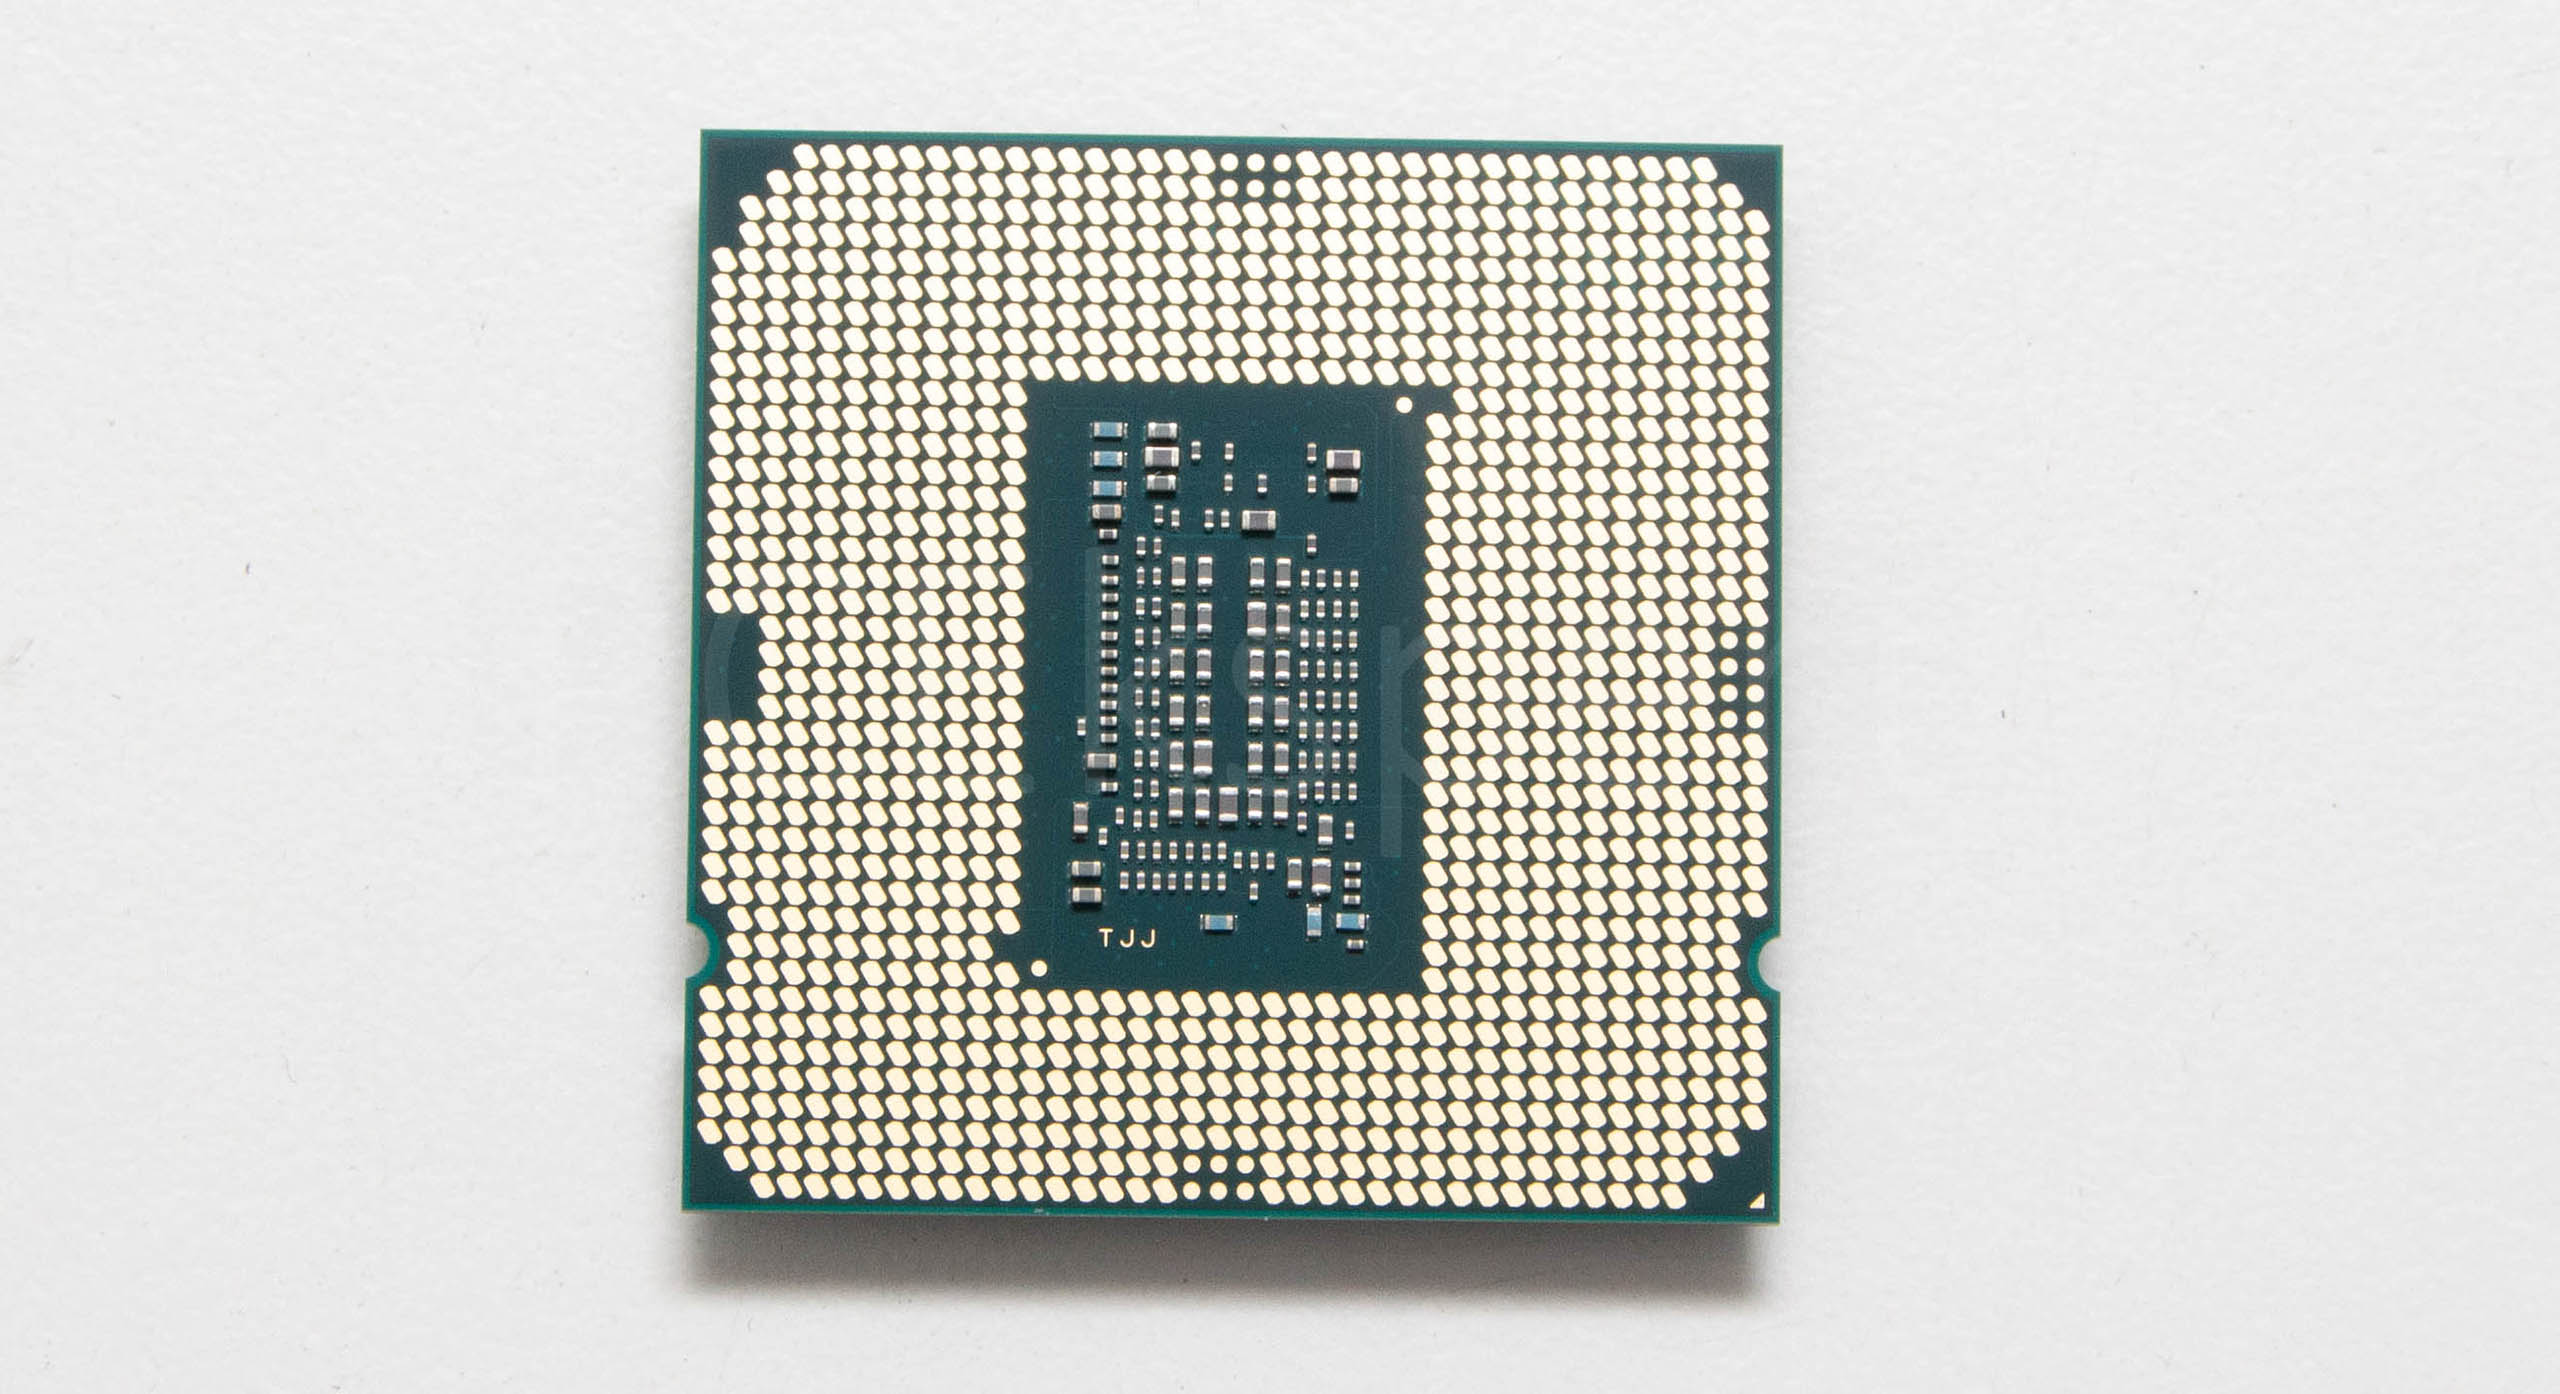 PC Ekspert - Hardware EZine - Intel Core i5-10400 recenzija